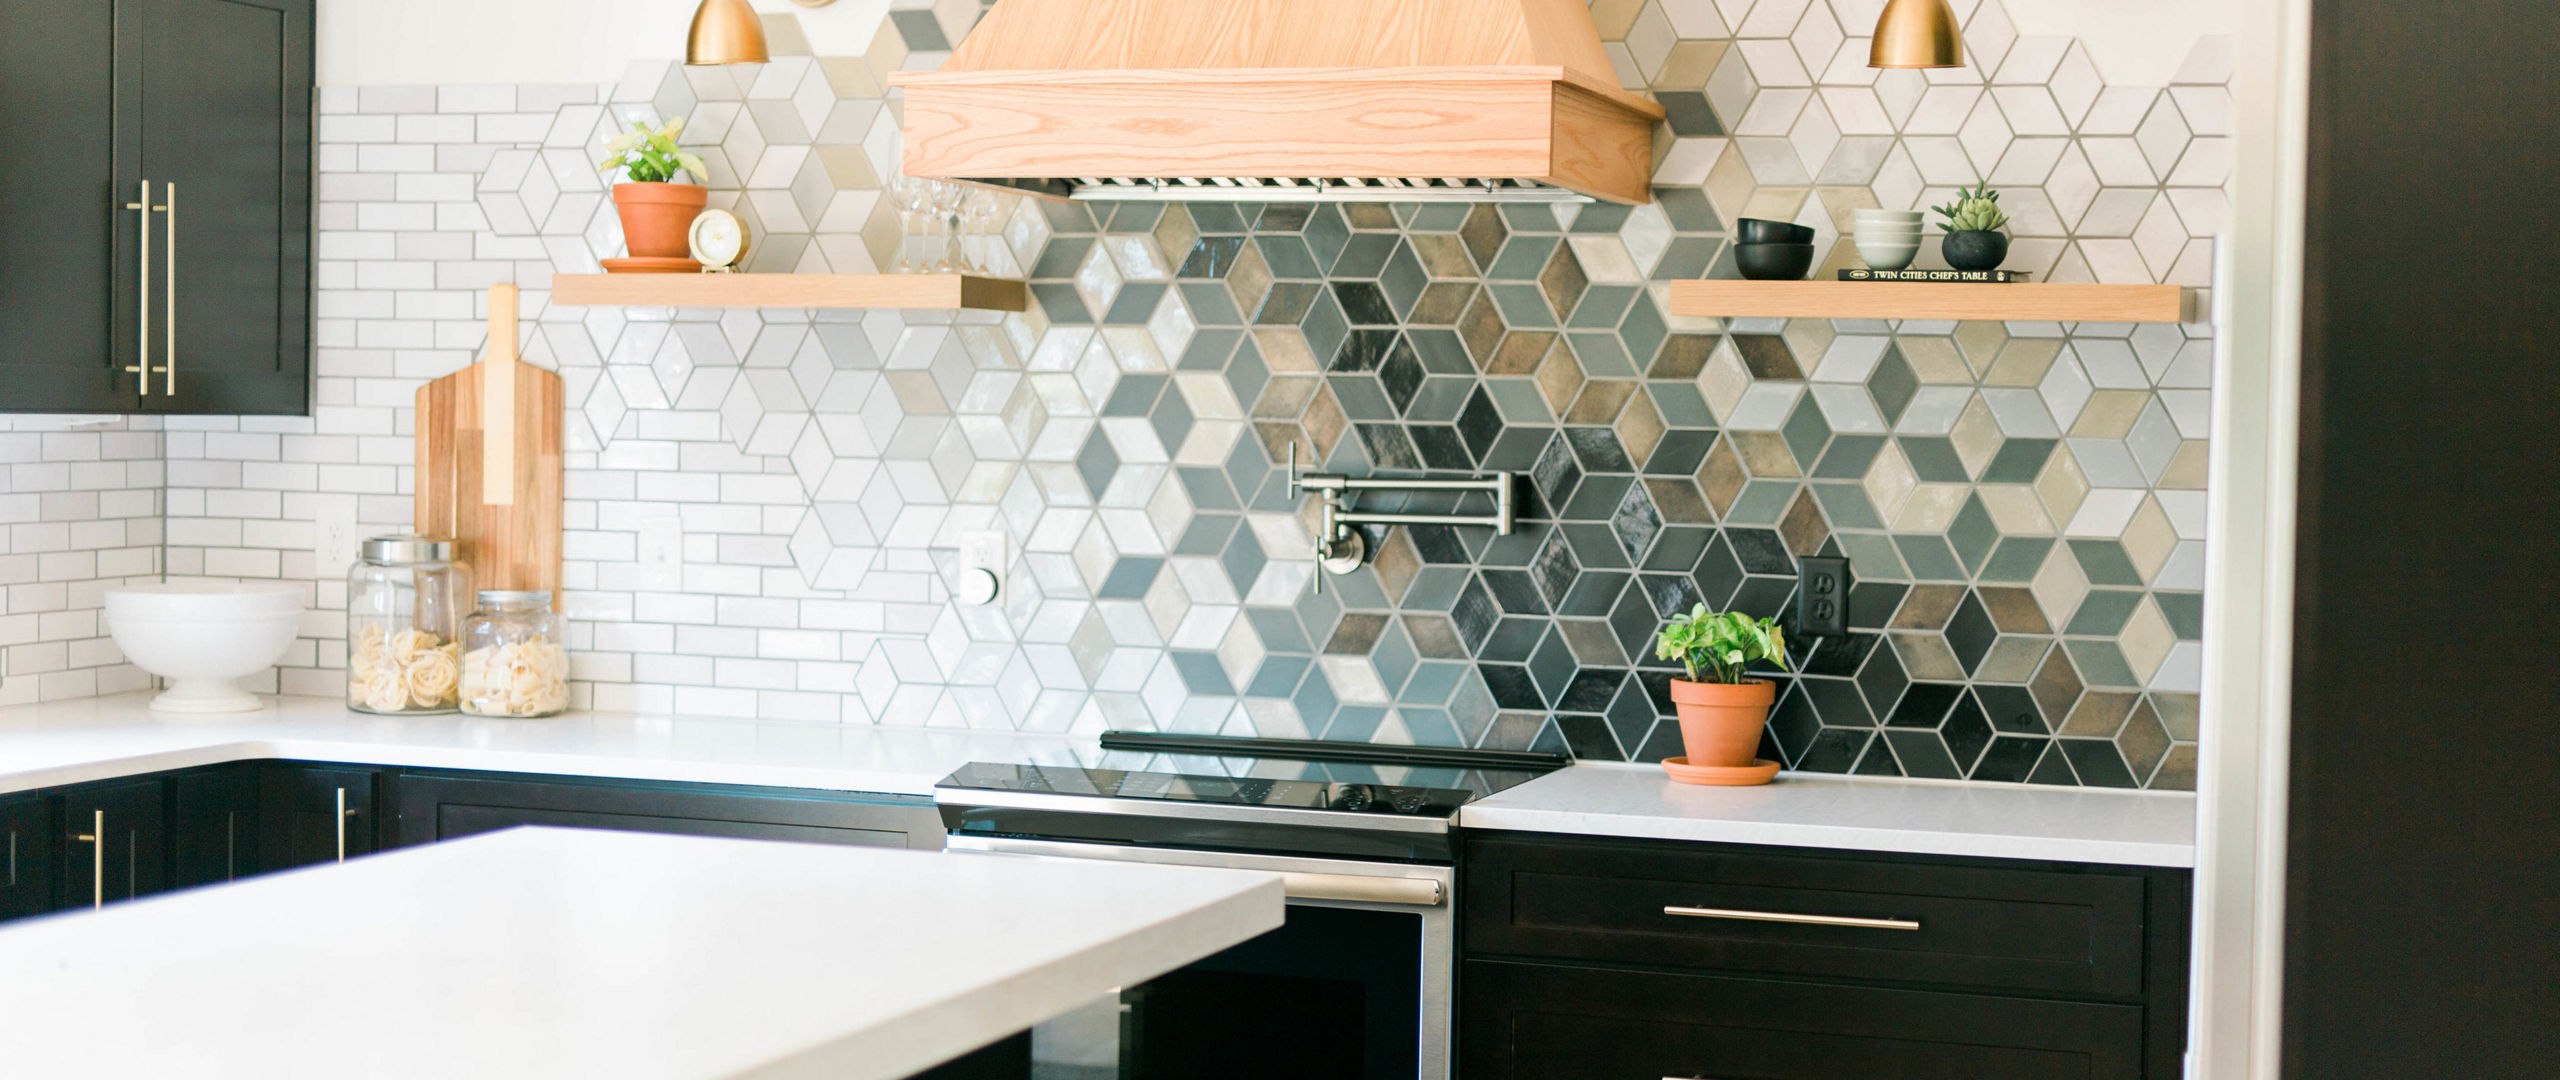 Revamp Your Dark Kitchen Cabinets with These Backsplash Ideas!